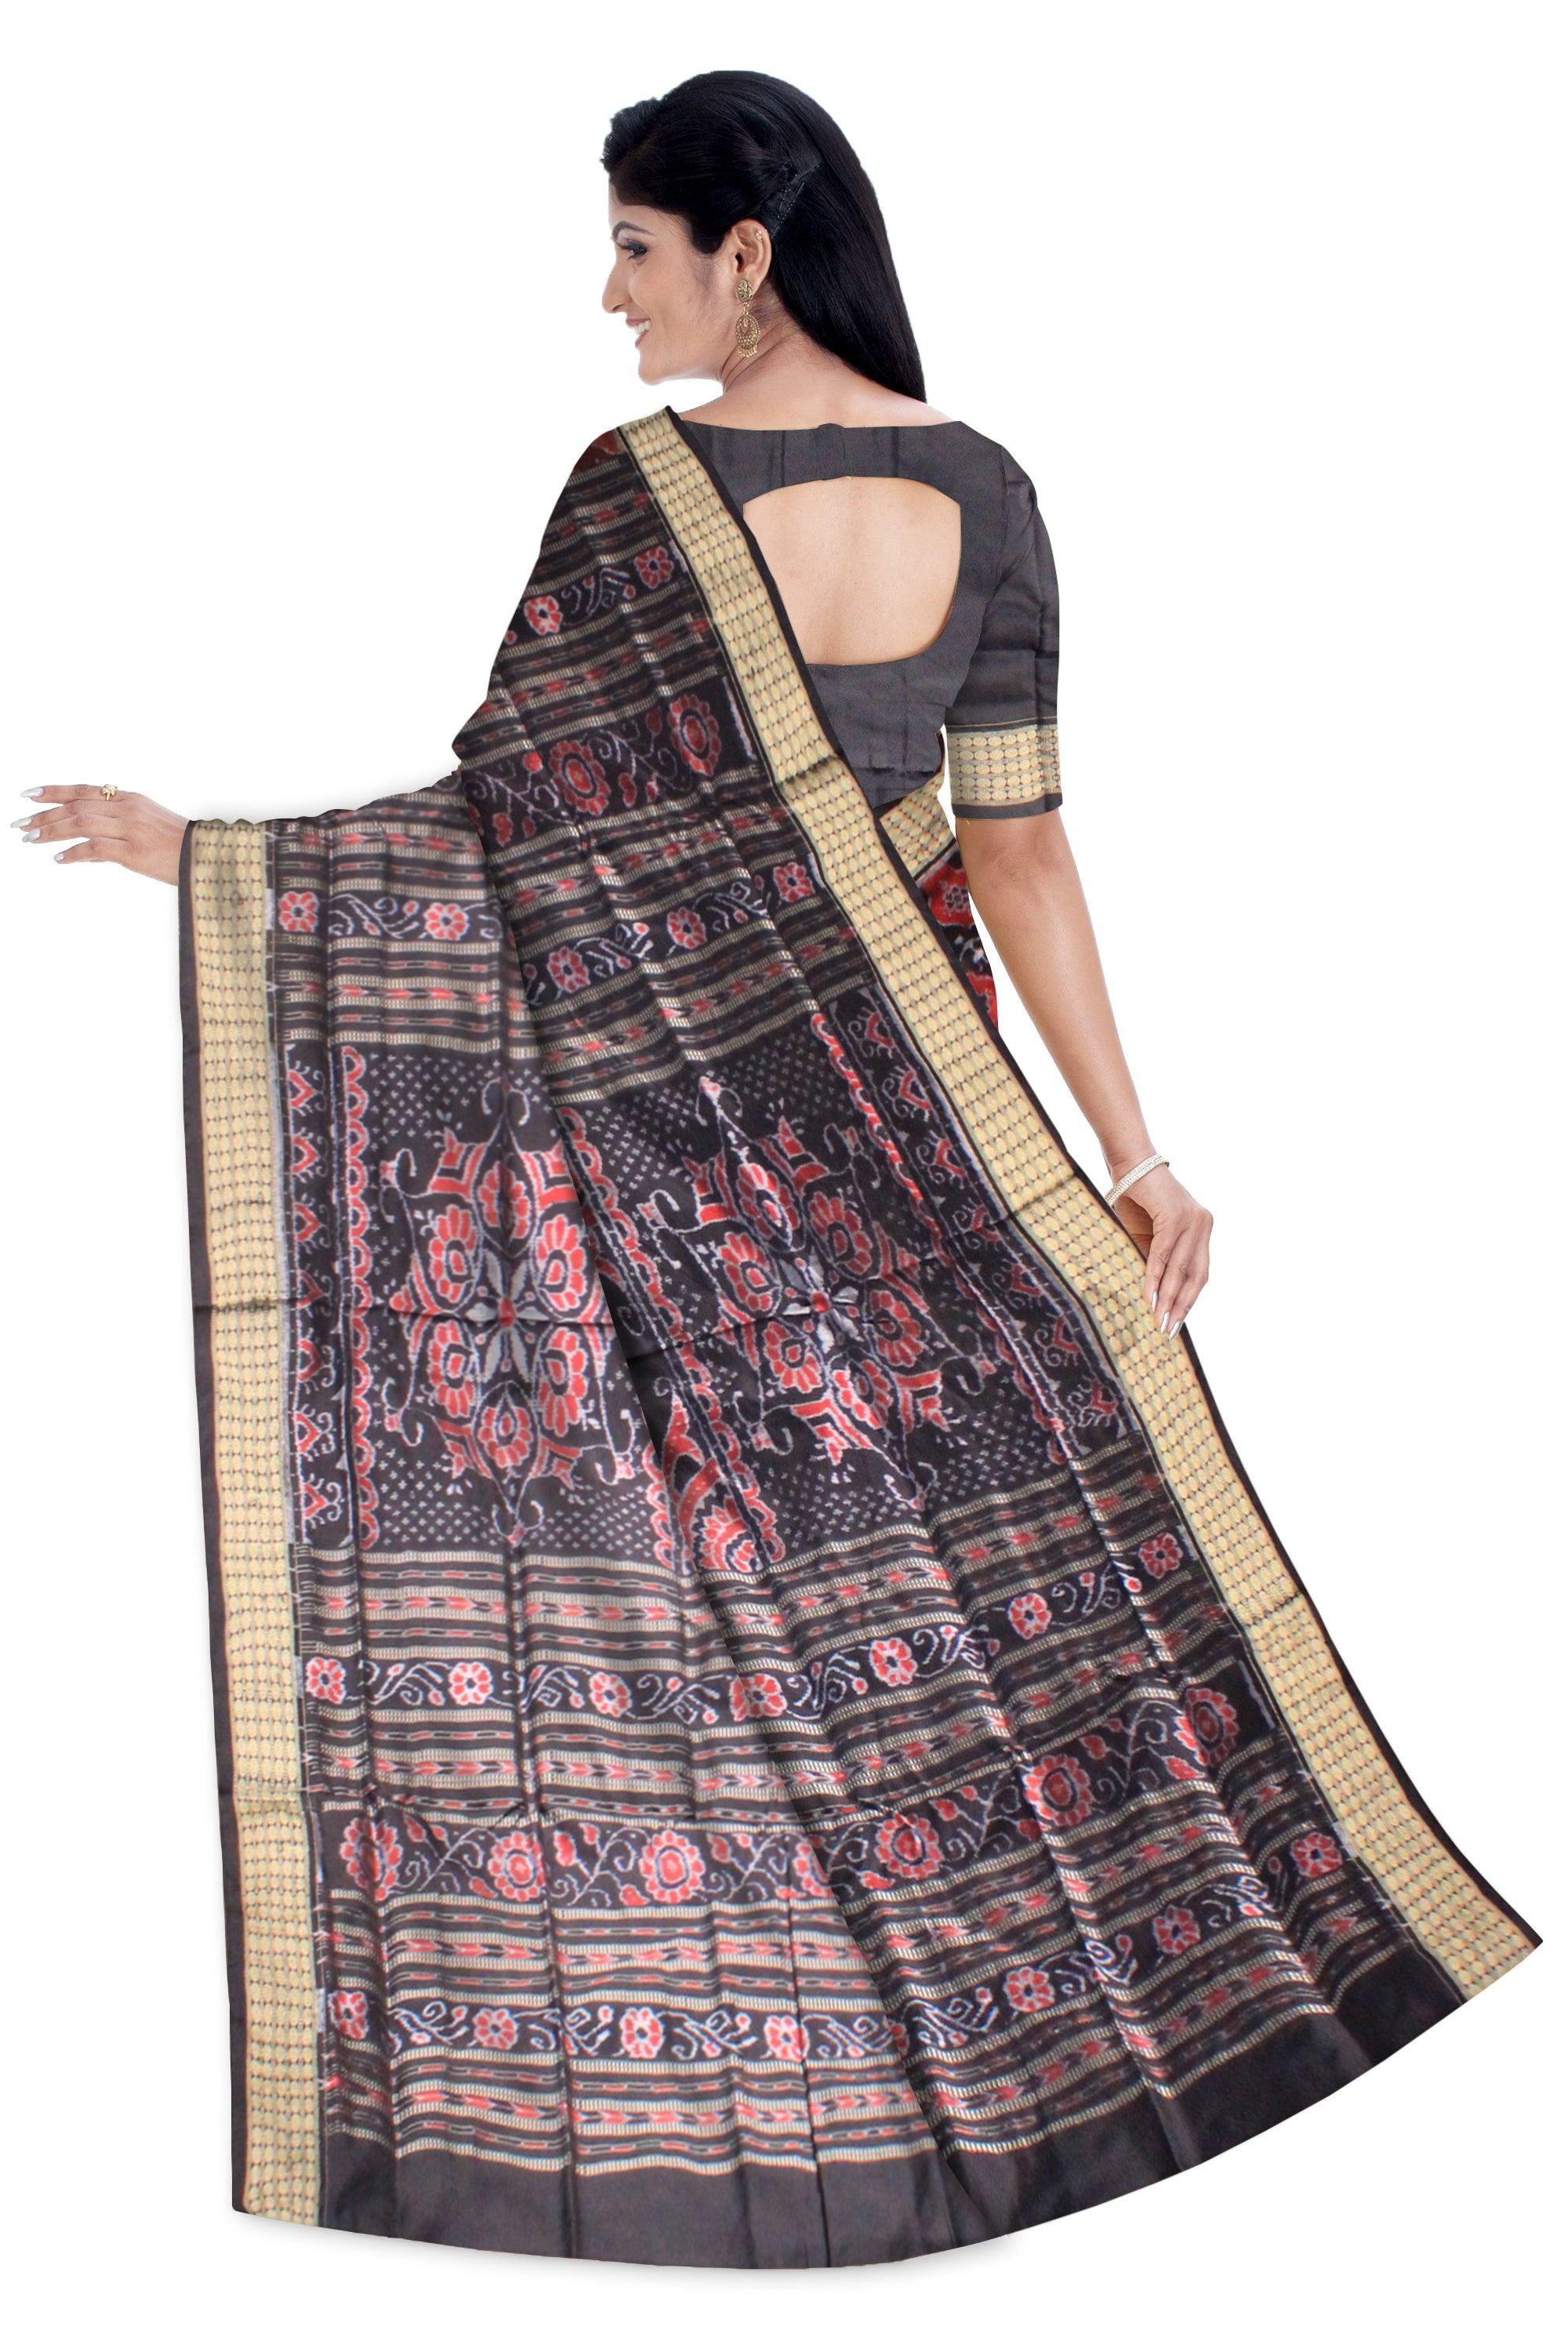 New Design ikat pattern Sambalpuri Pata Saree in  black and maroon  Color base ,b with black blouse piece . - Koshali Arts & Crafts Enterprise